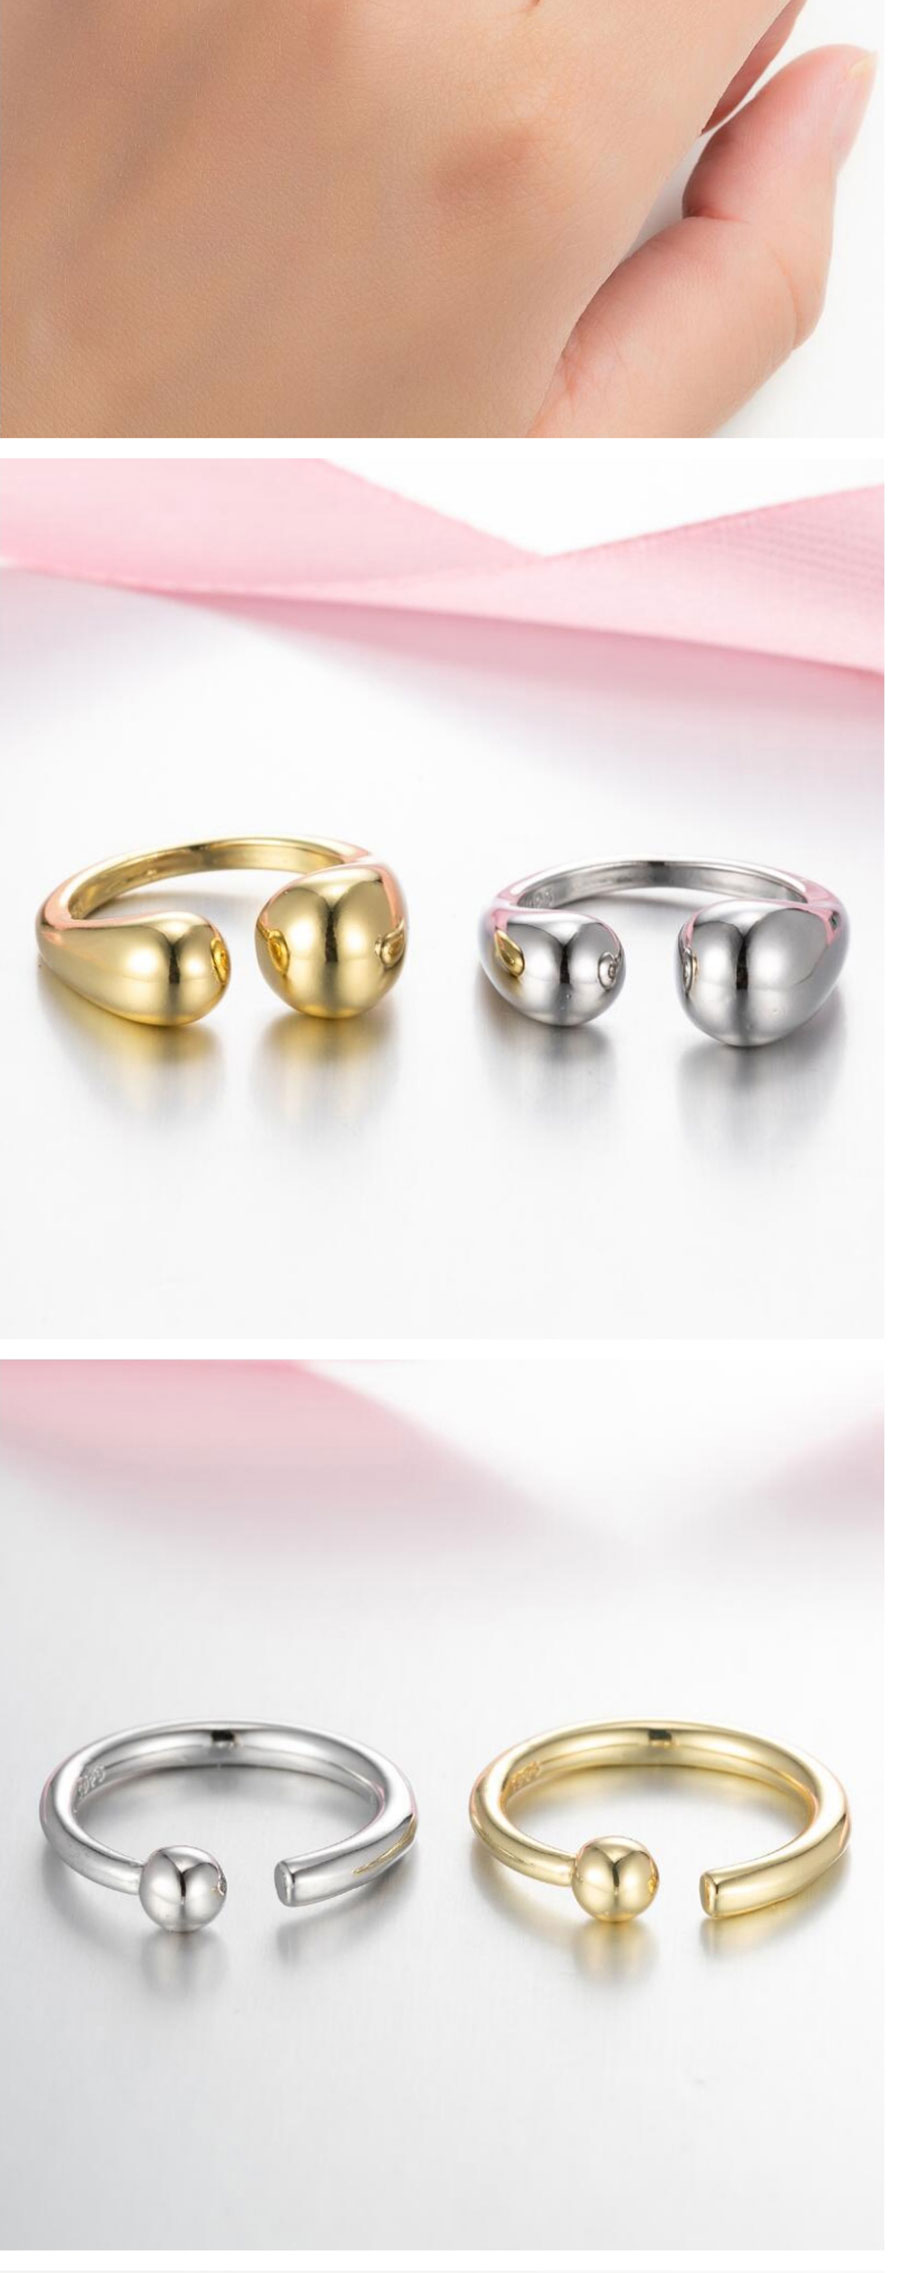 Fashion Silver-6 Stainless Steel Irregular Drop Open Ring,Rings